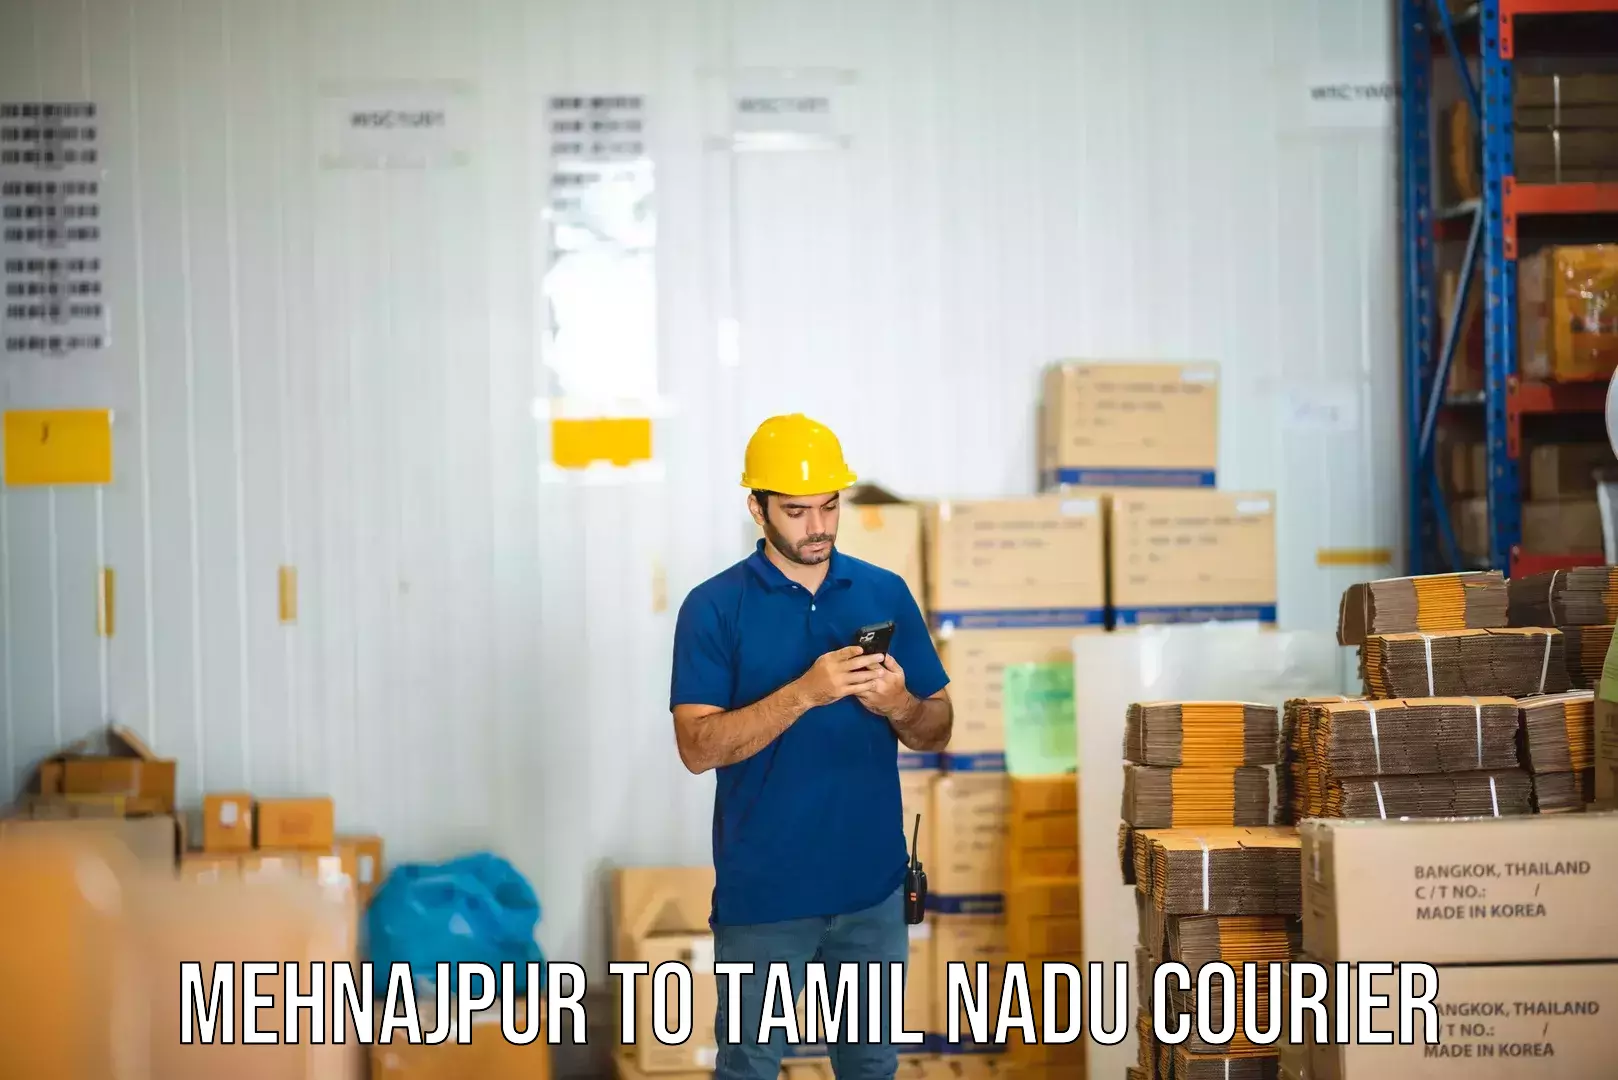 Sustainable shipping practices Mehnajpur to Tirukalukundram